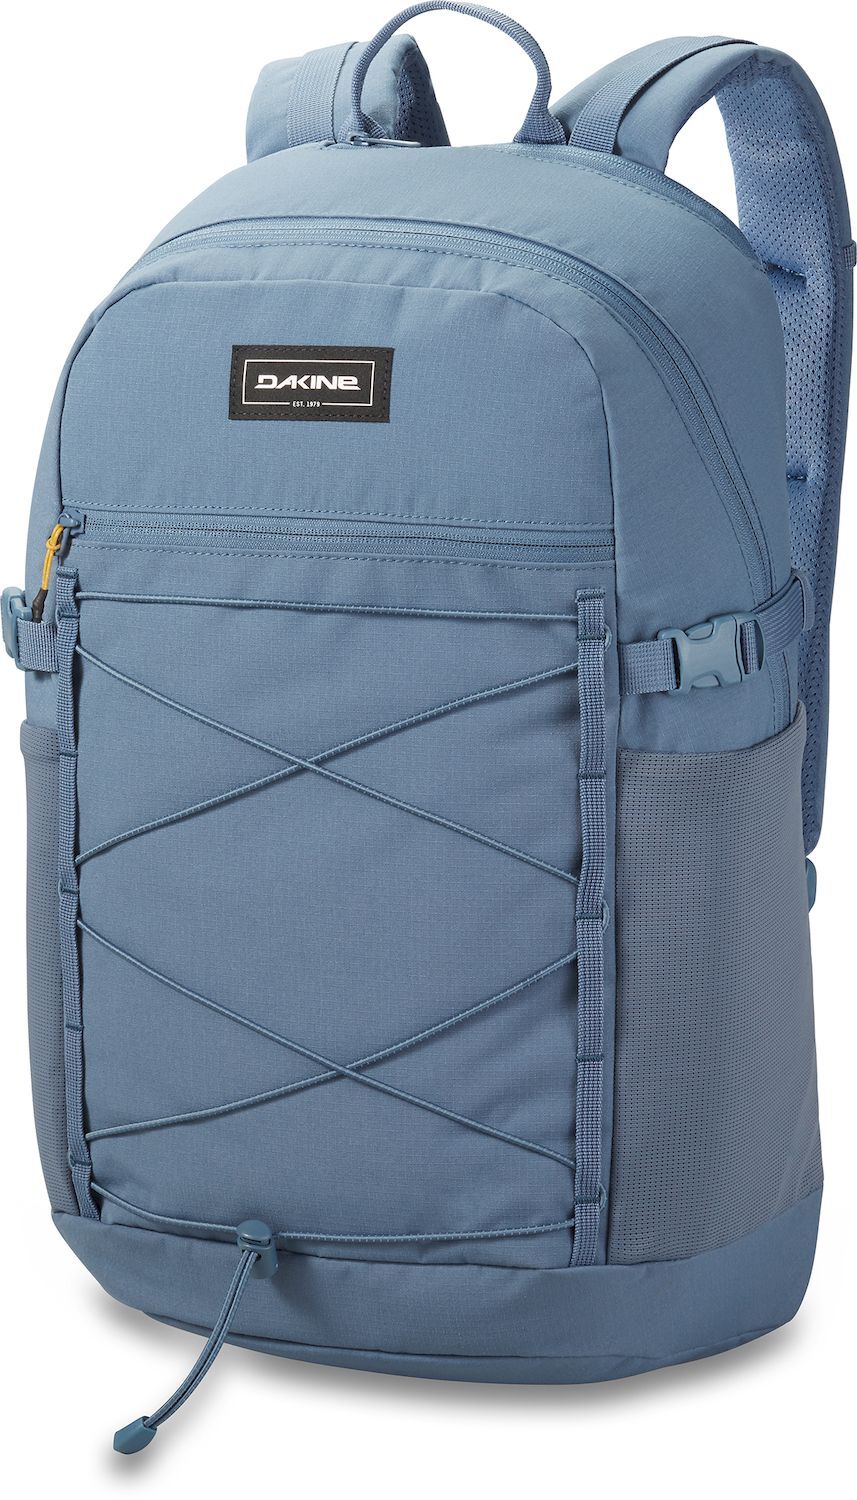 Dakine Wndr Pack 25L - Backpack